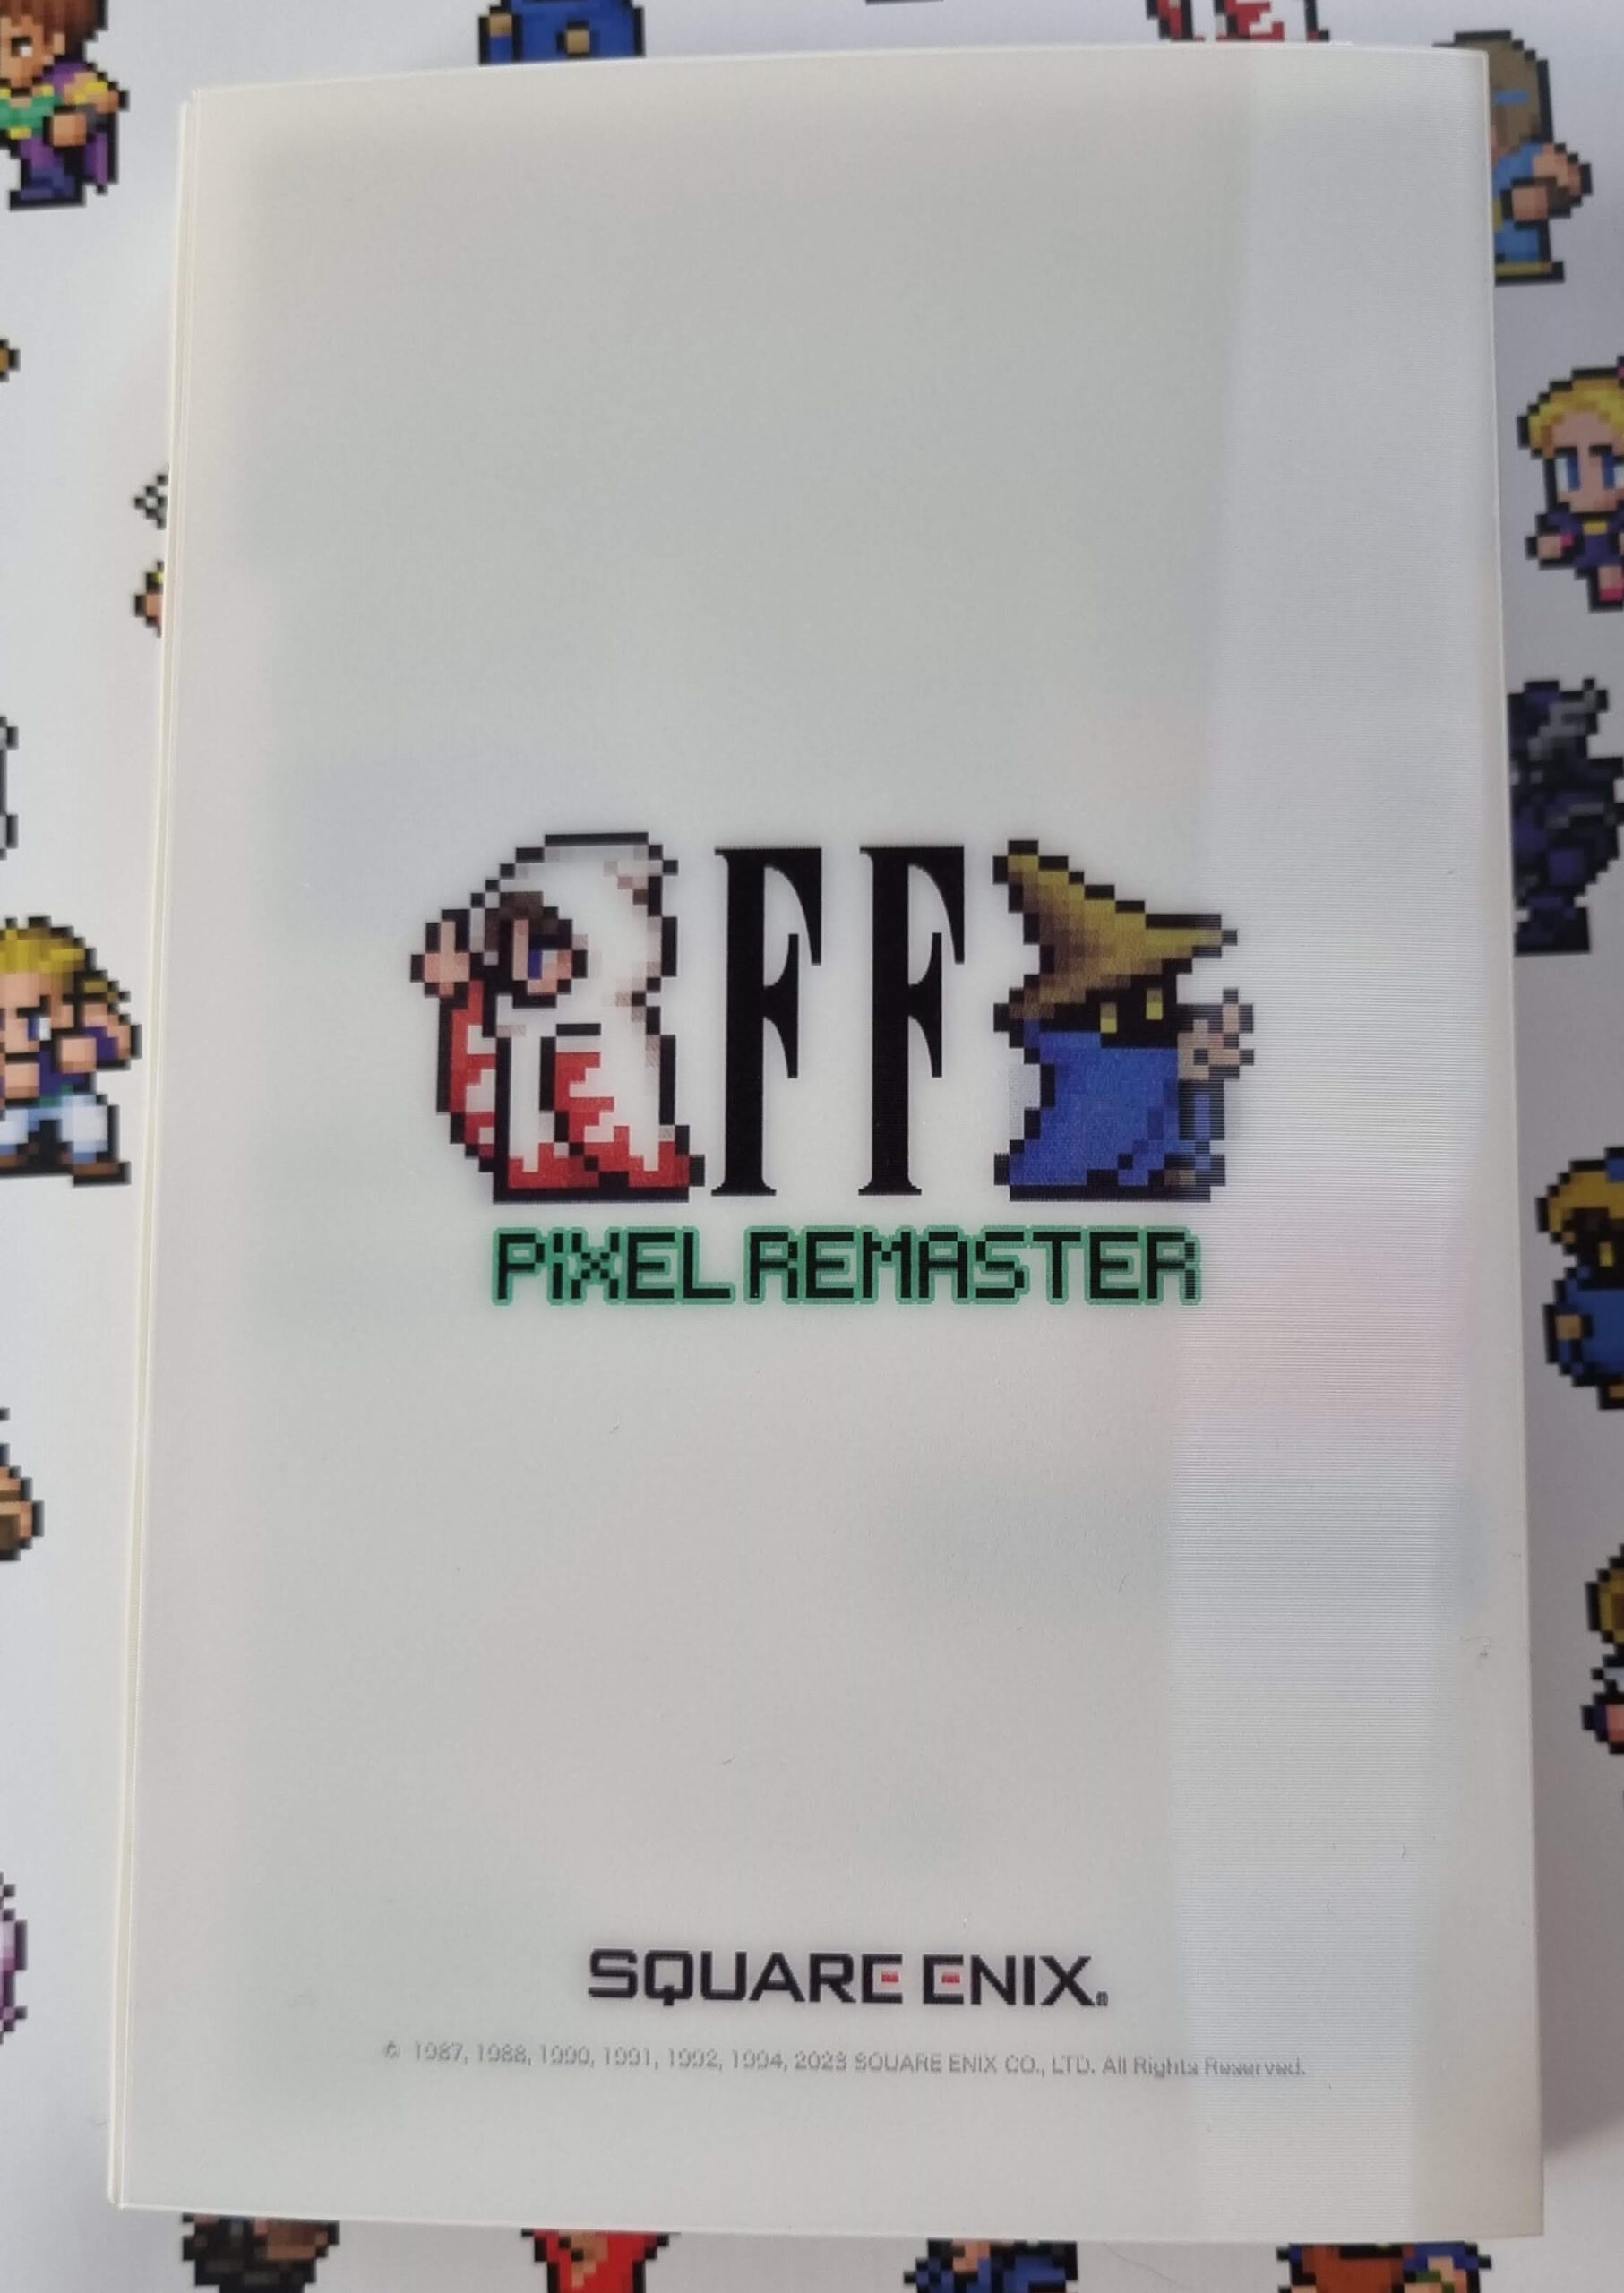 Final Fantasy Pixel Remaster collector's edition